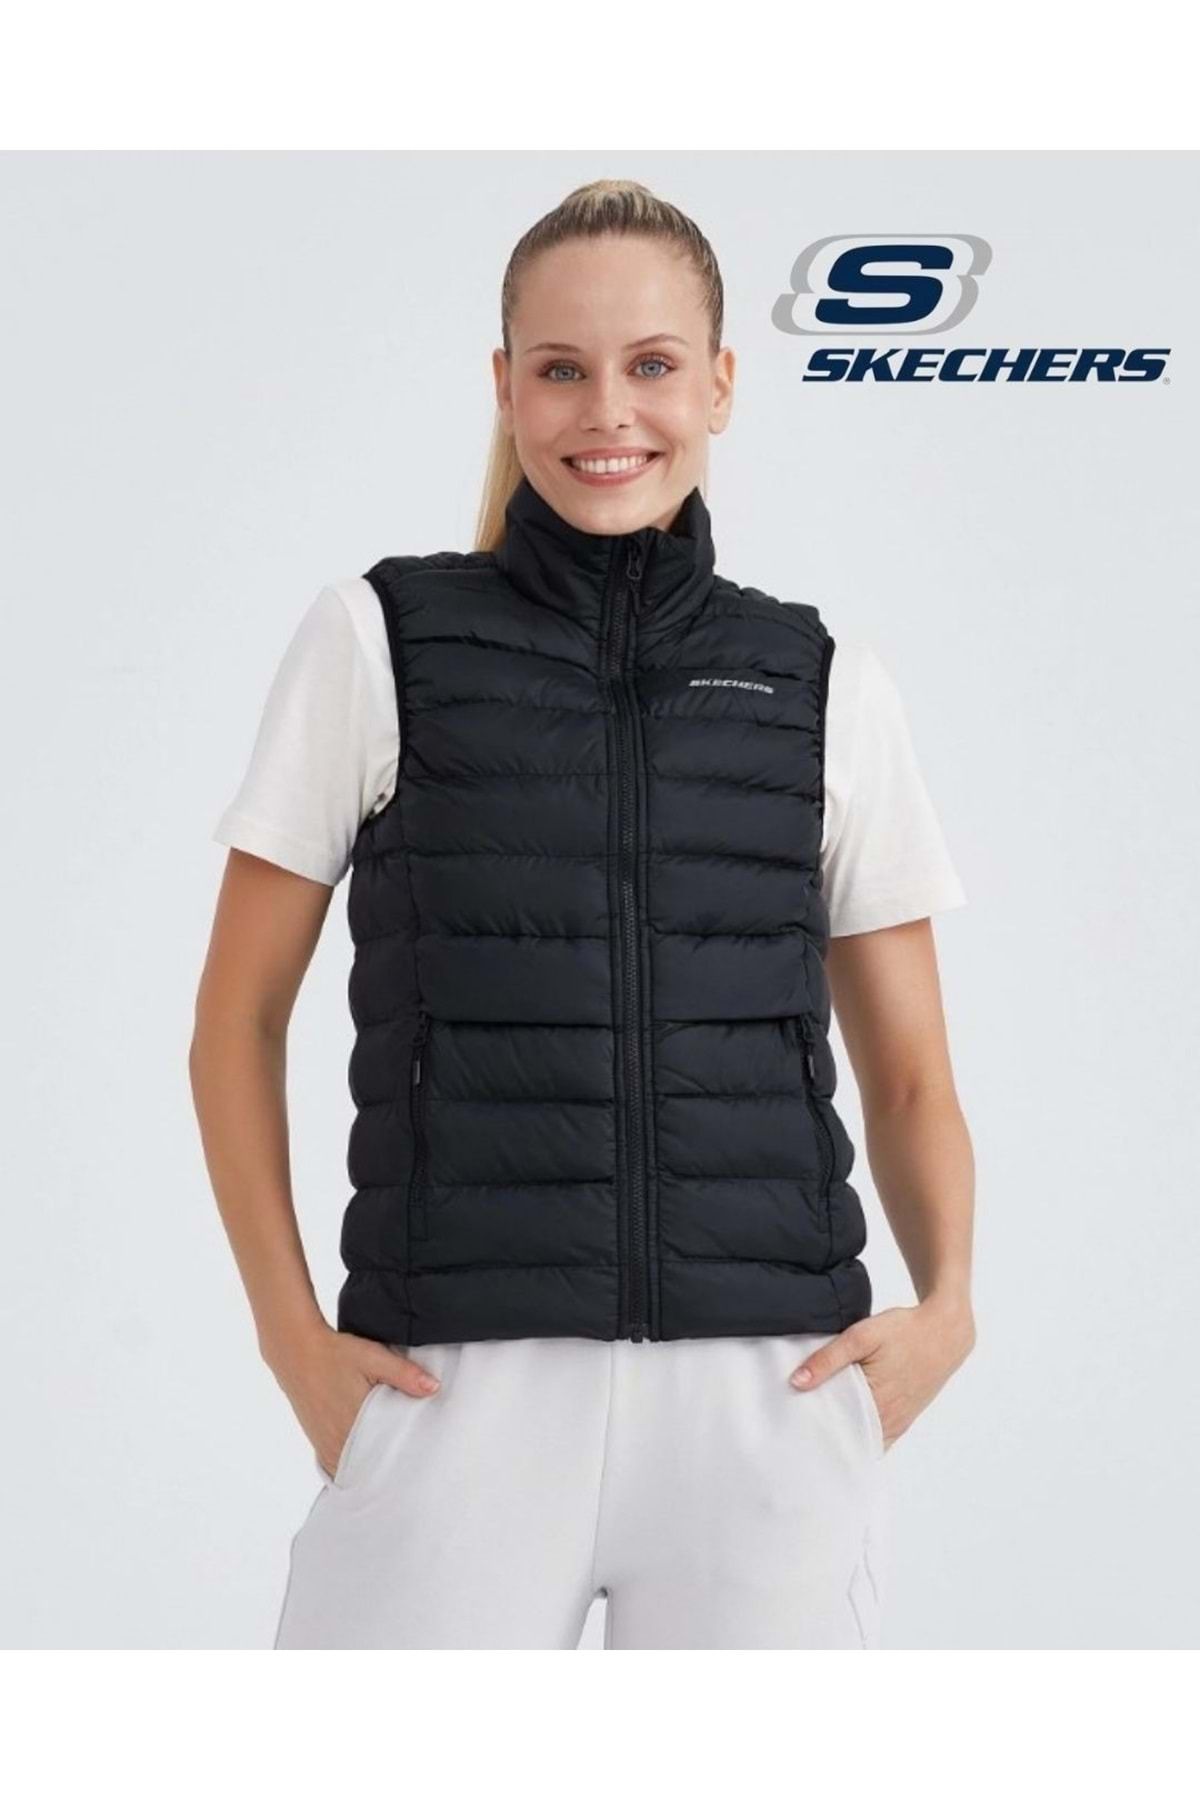 Skechers W Outerwear Padded Vest S231239-001 Kadın Yelek Siyah